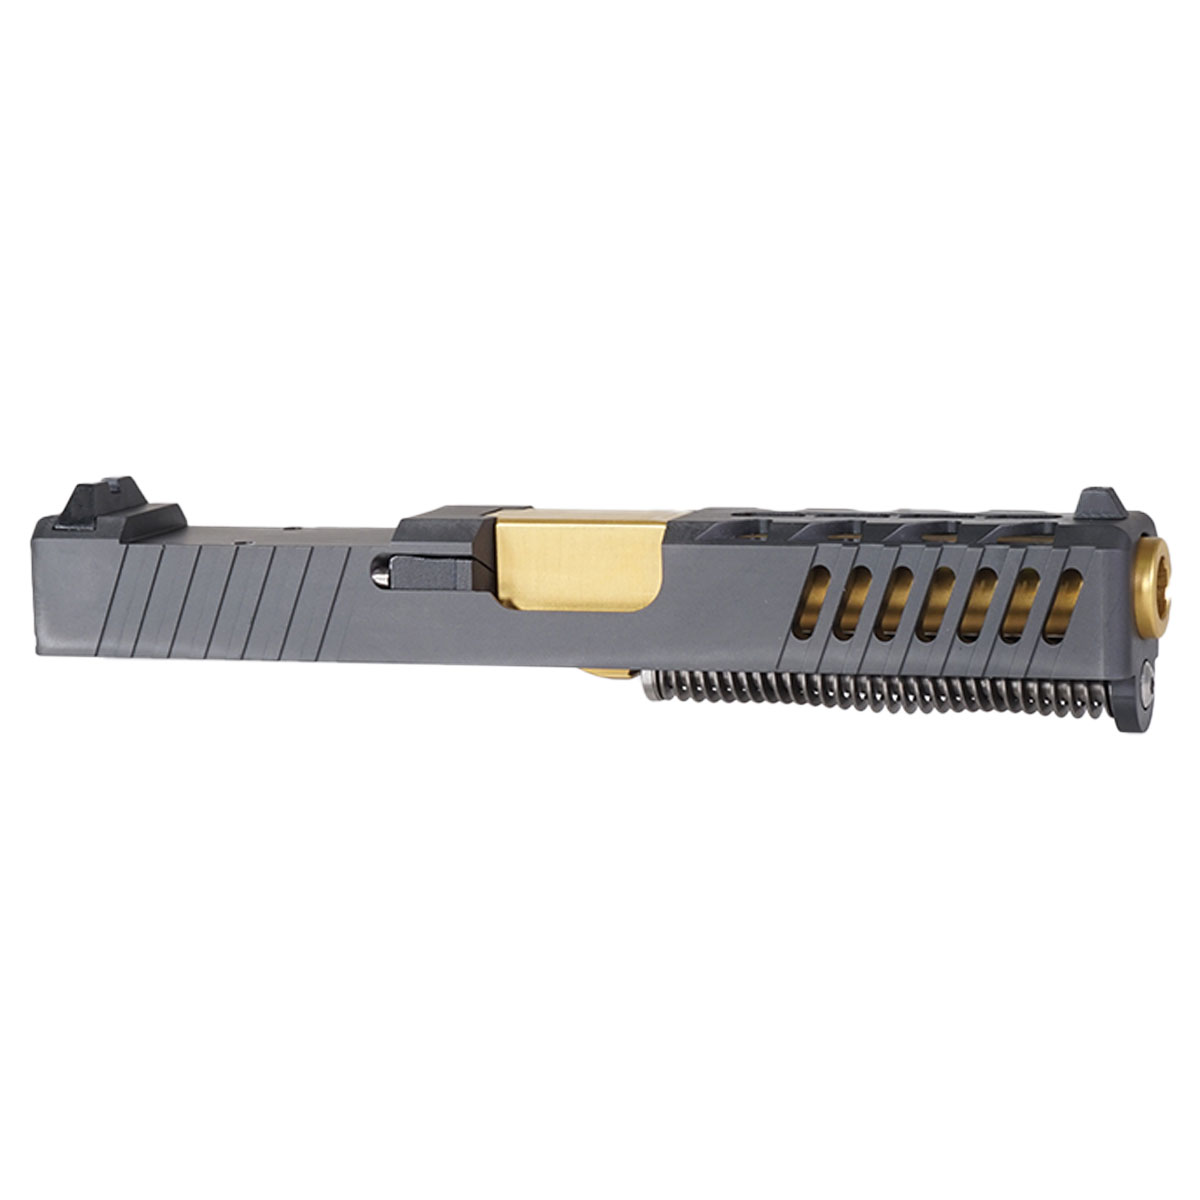 DD 'Industrialist Revolution' 9mm Complete Slide Kit - Glock 19 Gen 1-3 Compatible